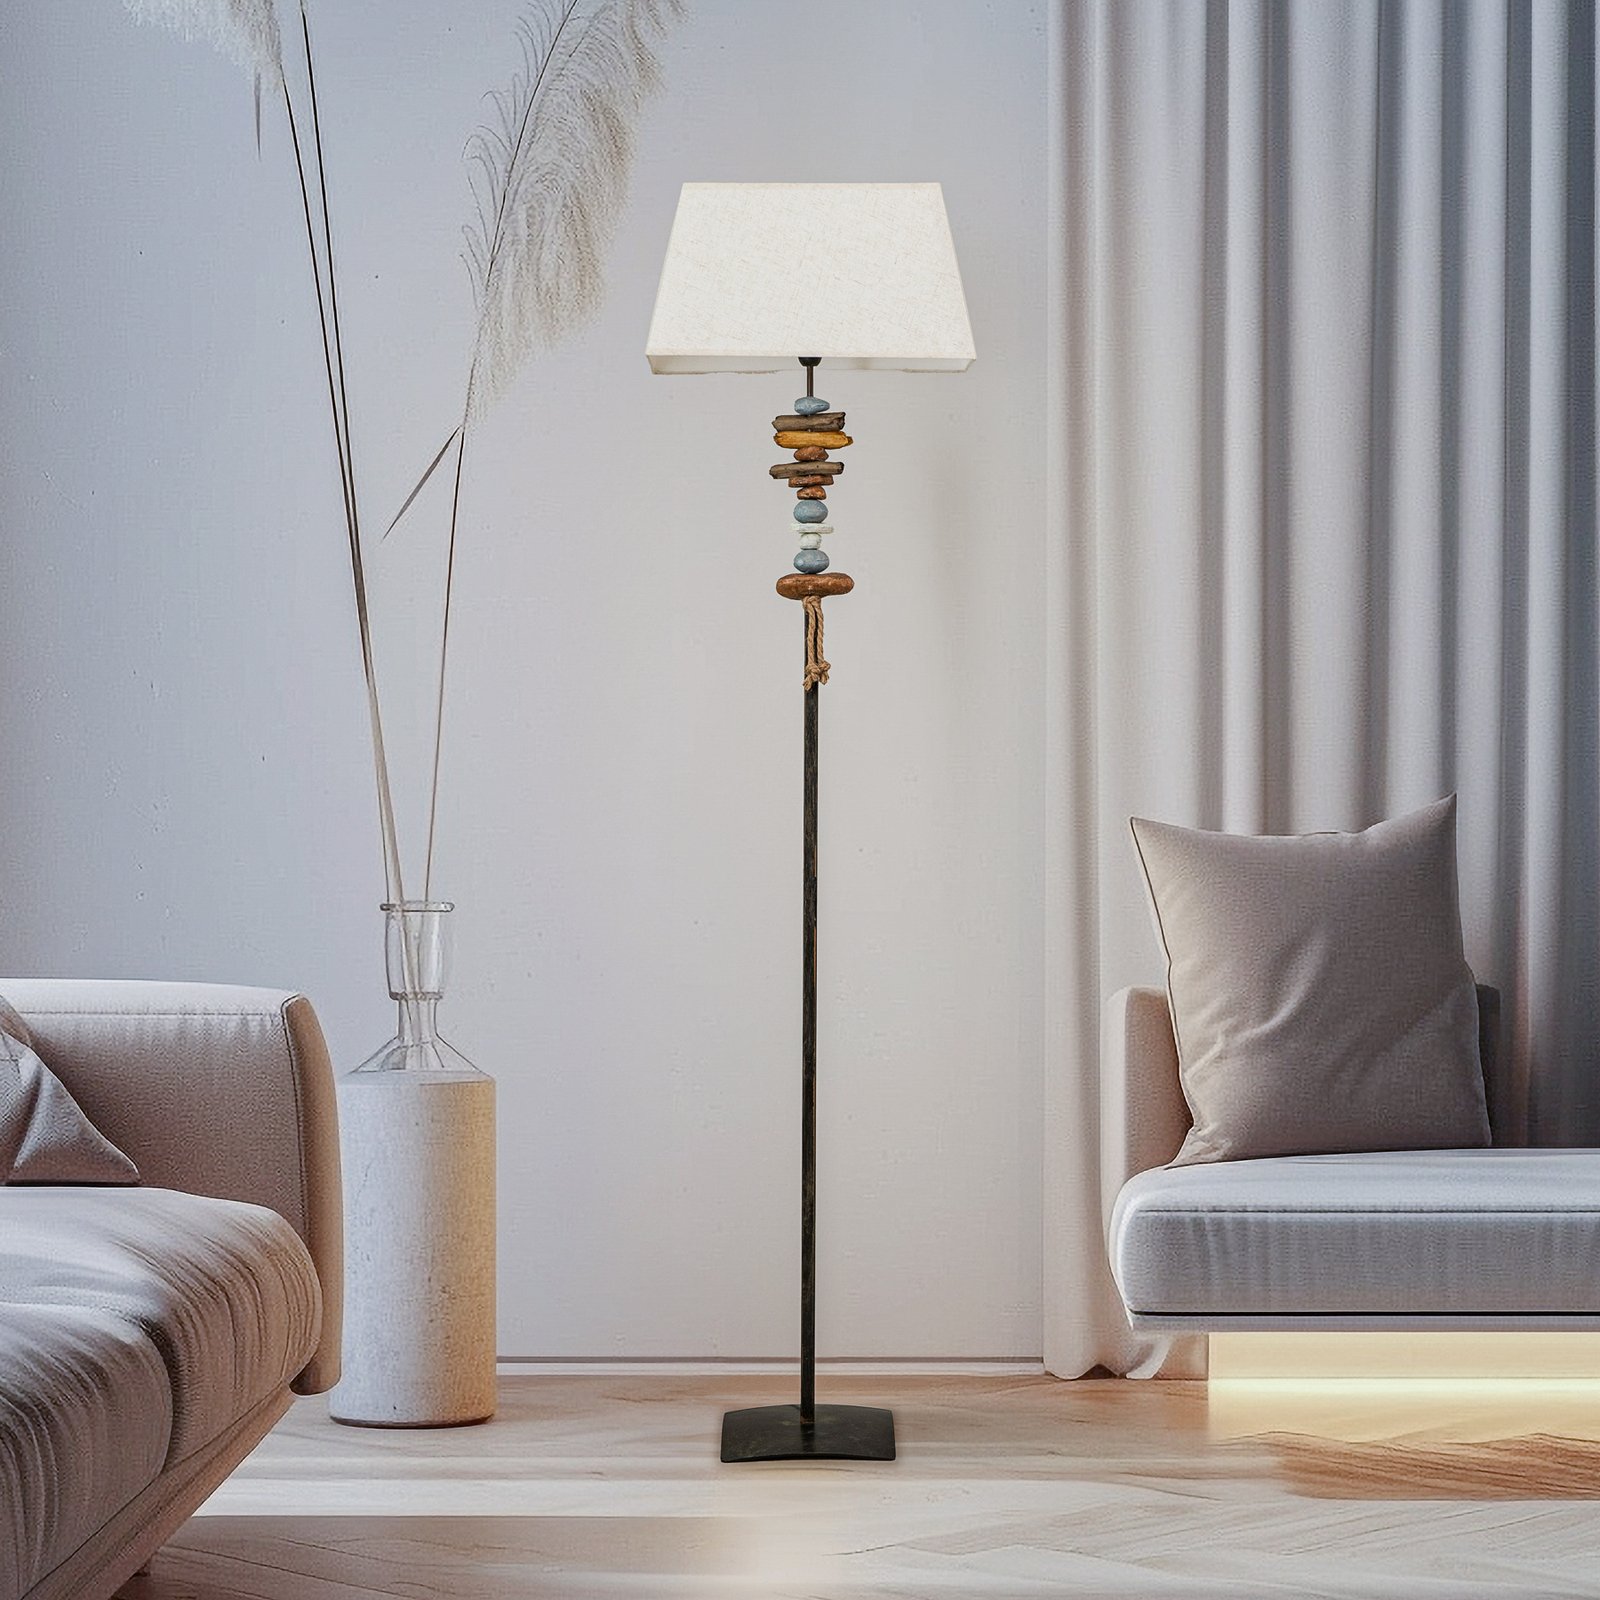 Seregon floor lamp with stone decor and fabric shade